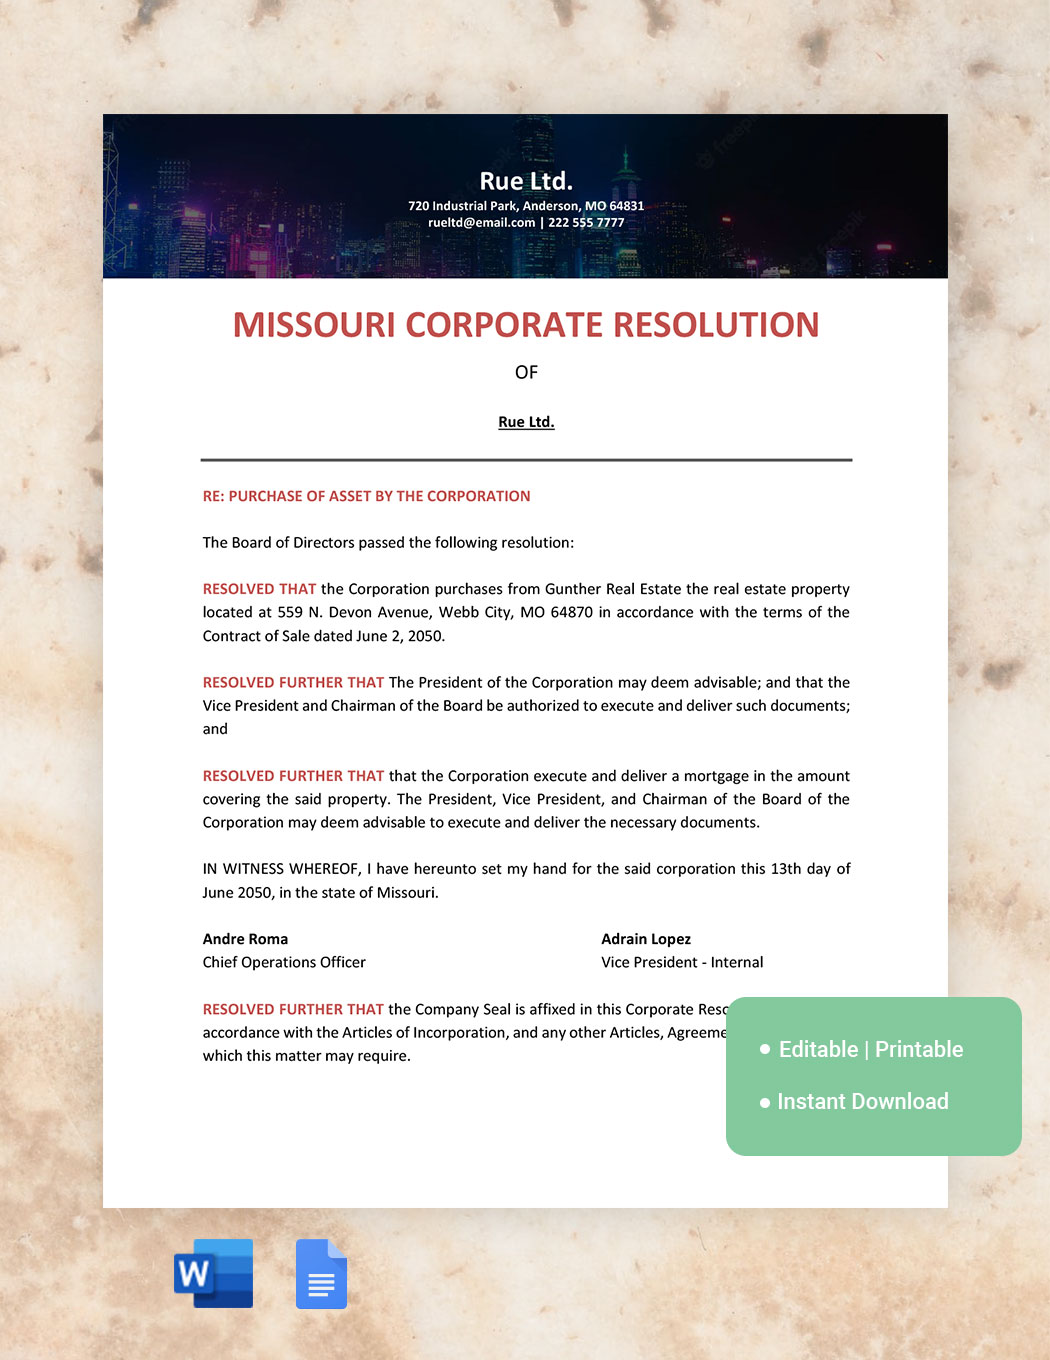 Missouri Corporate Resolution Template in Word, Google Docs